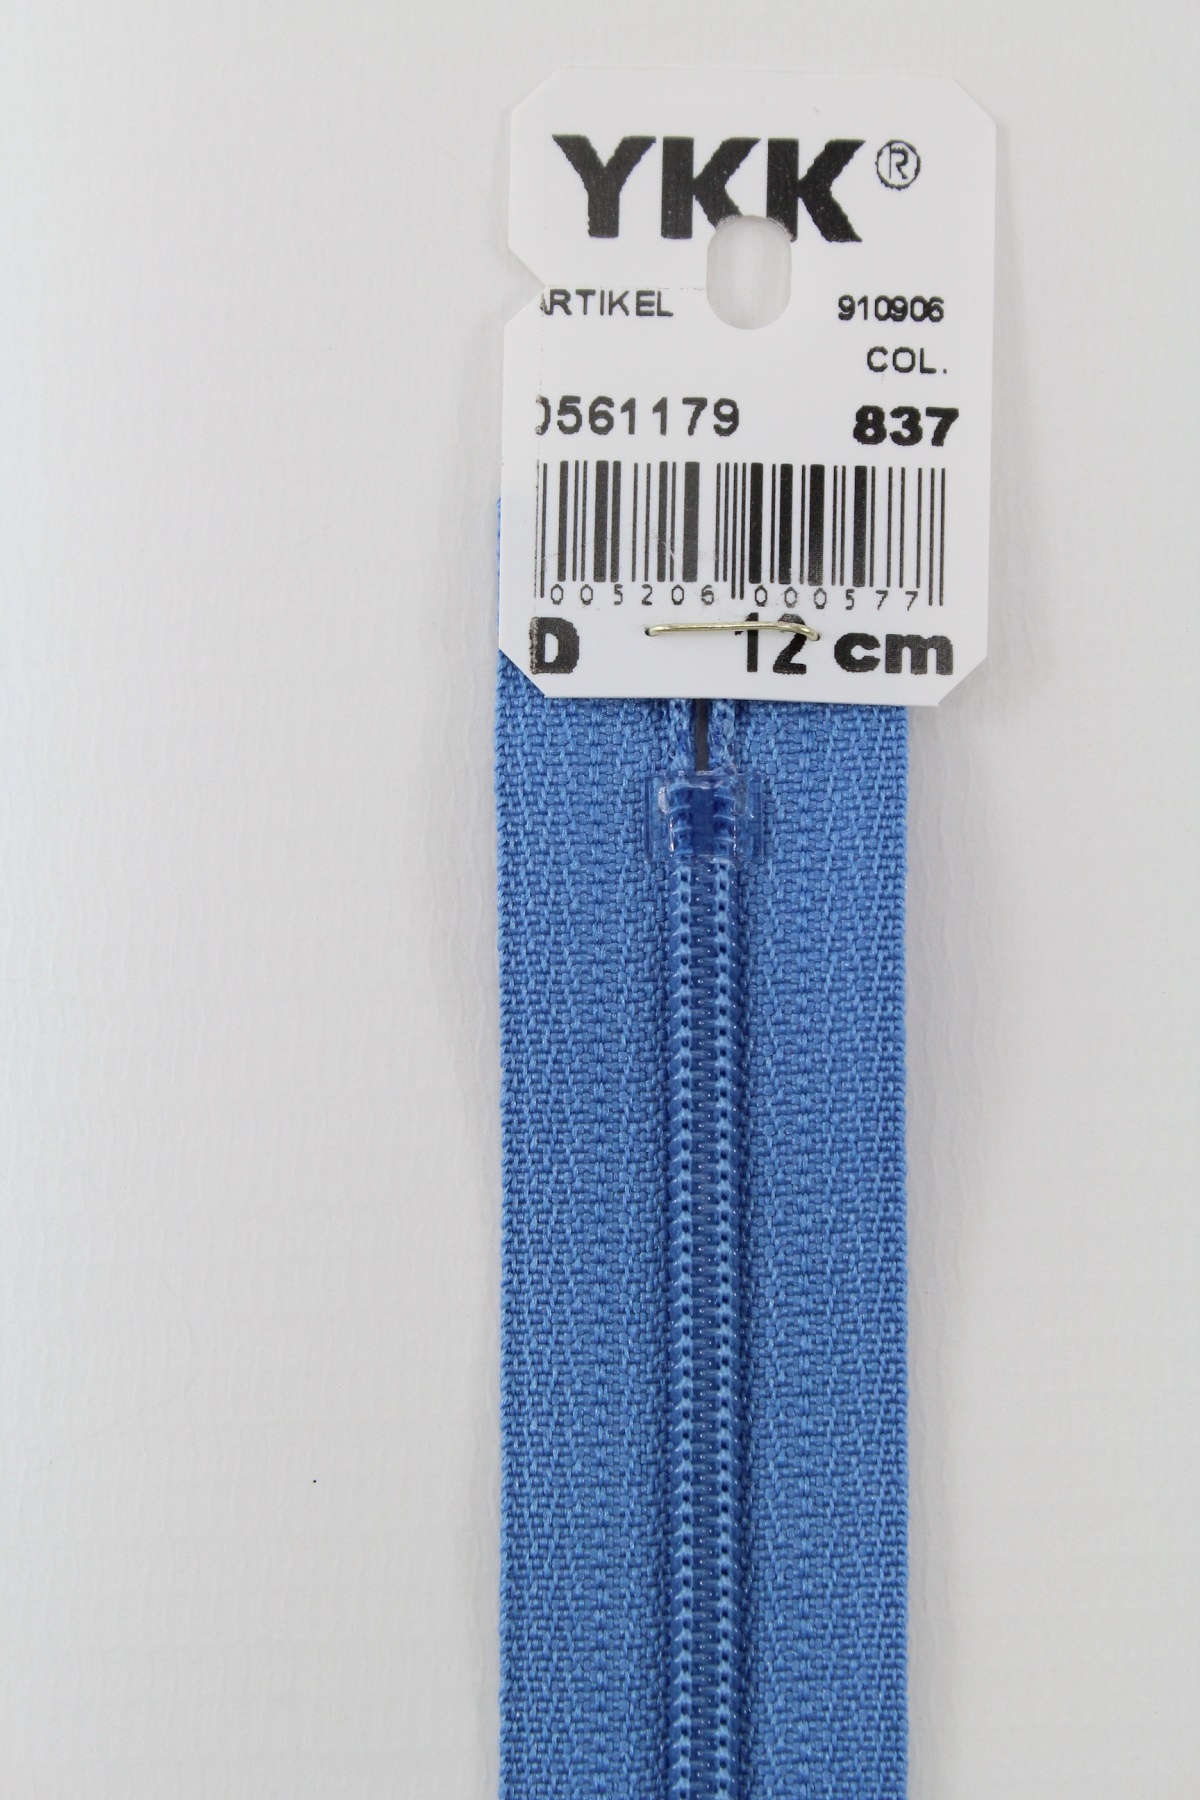 YKK-Reissverschluss 12cm-60cm, nicht teilbar, taubenblau